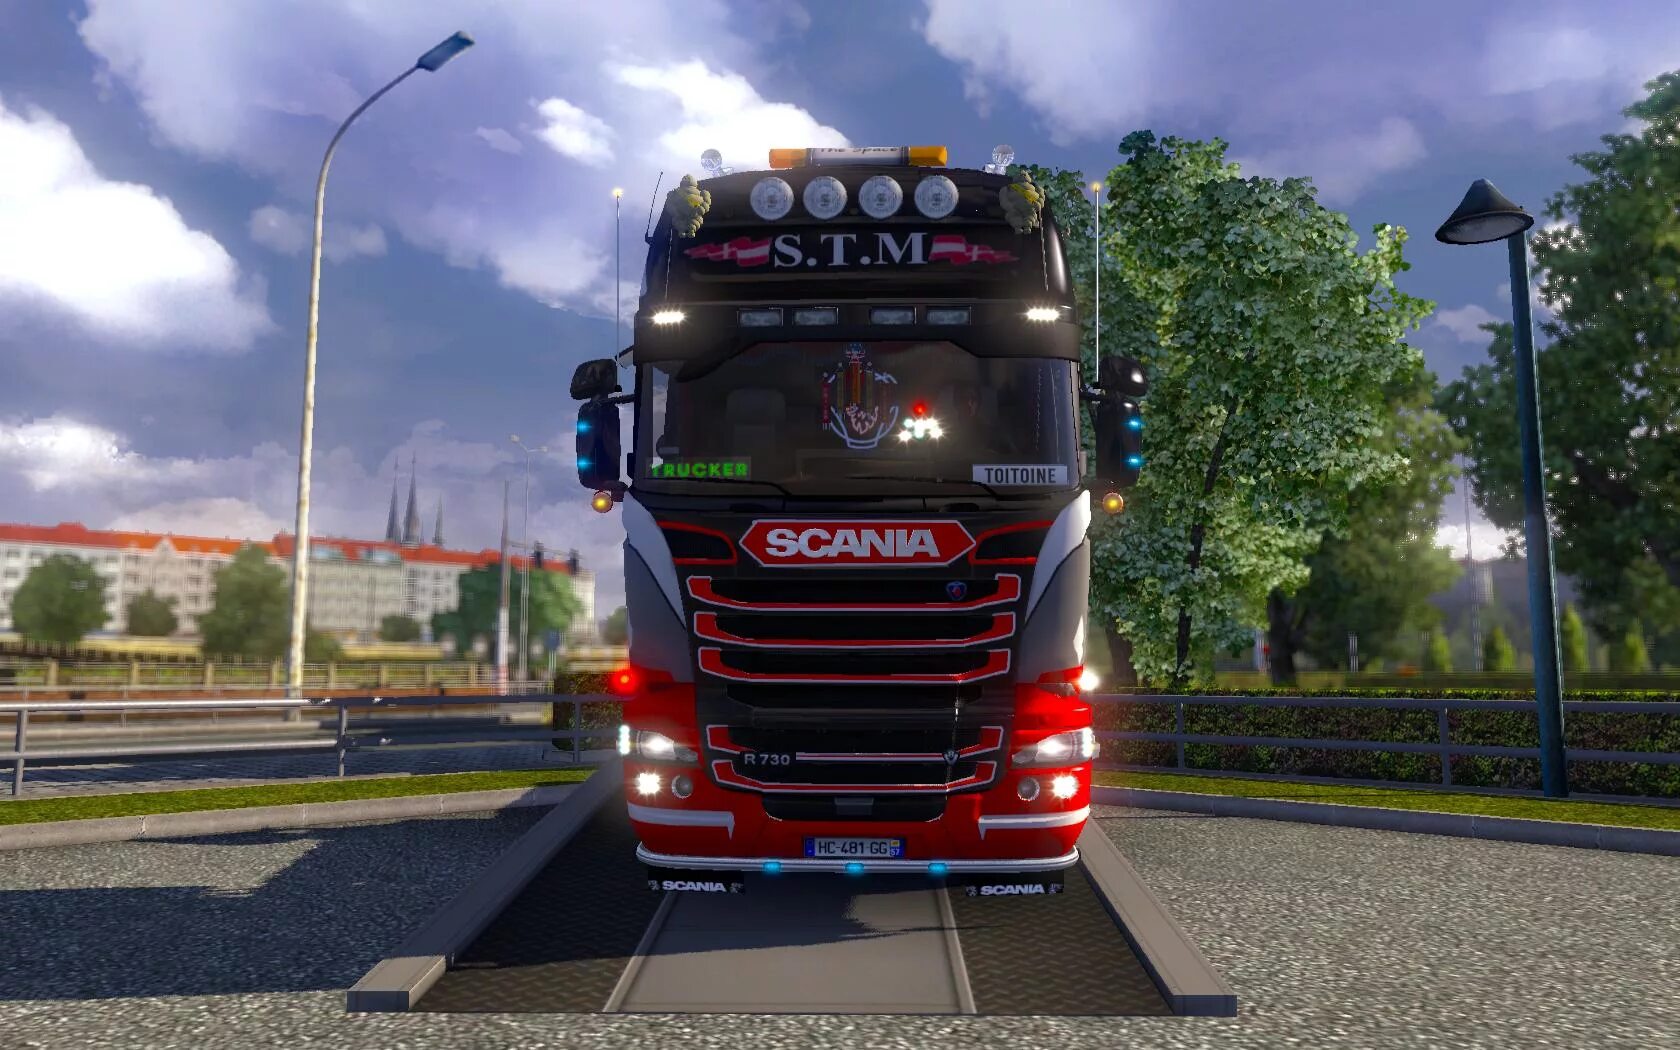 Пожарная машина Euro Truck Simulator 2. Scania r Streamline. Моды на етс 2 пожарная машина. Проблесковый маячок Скания.